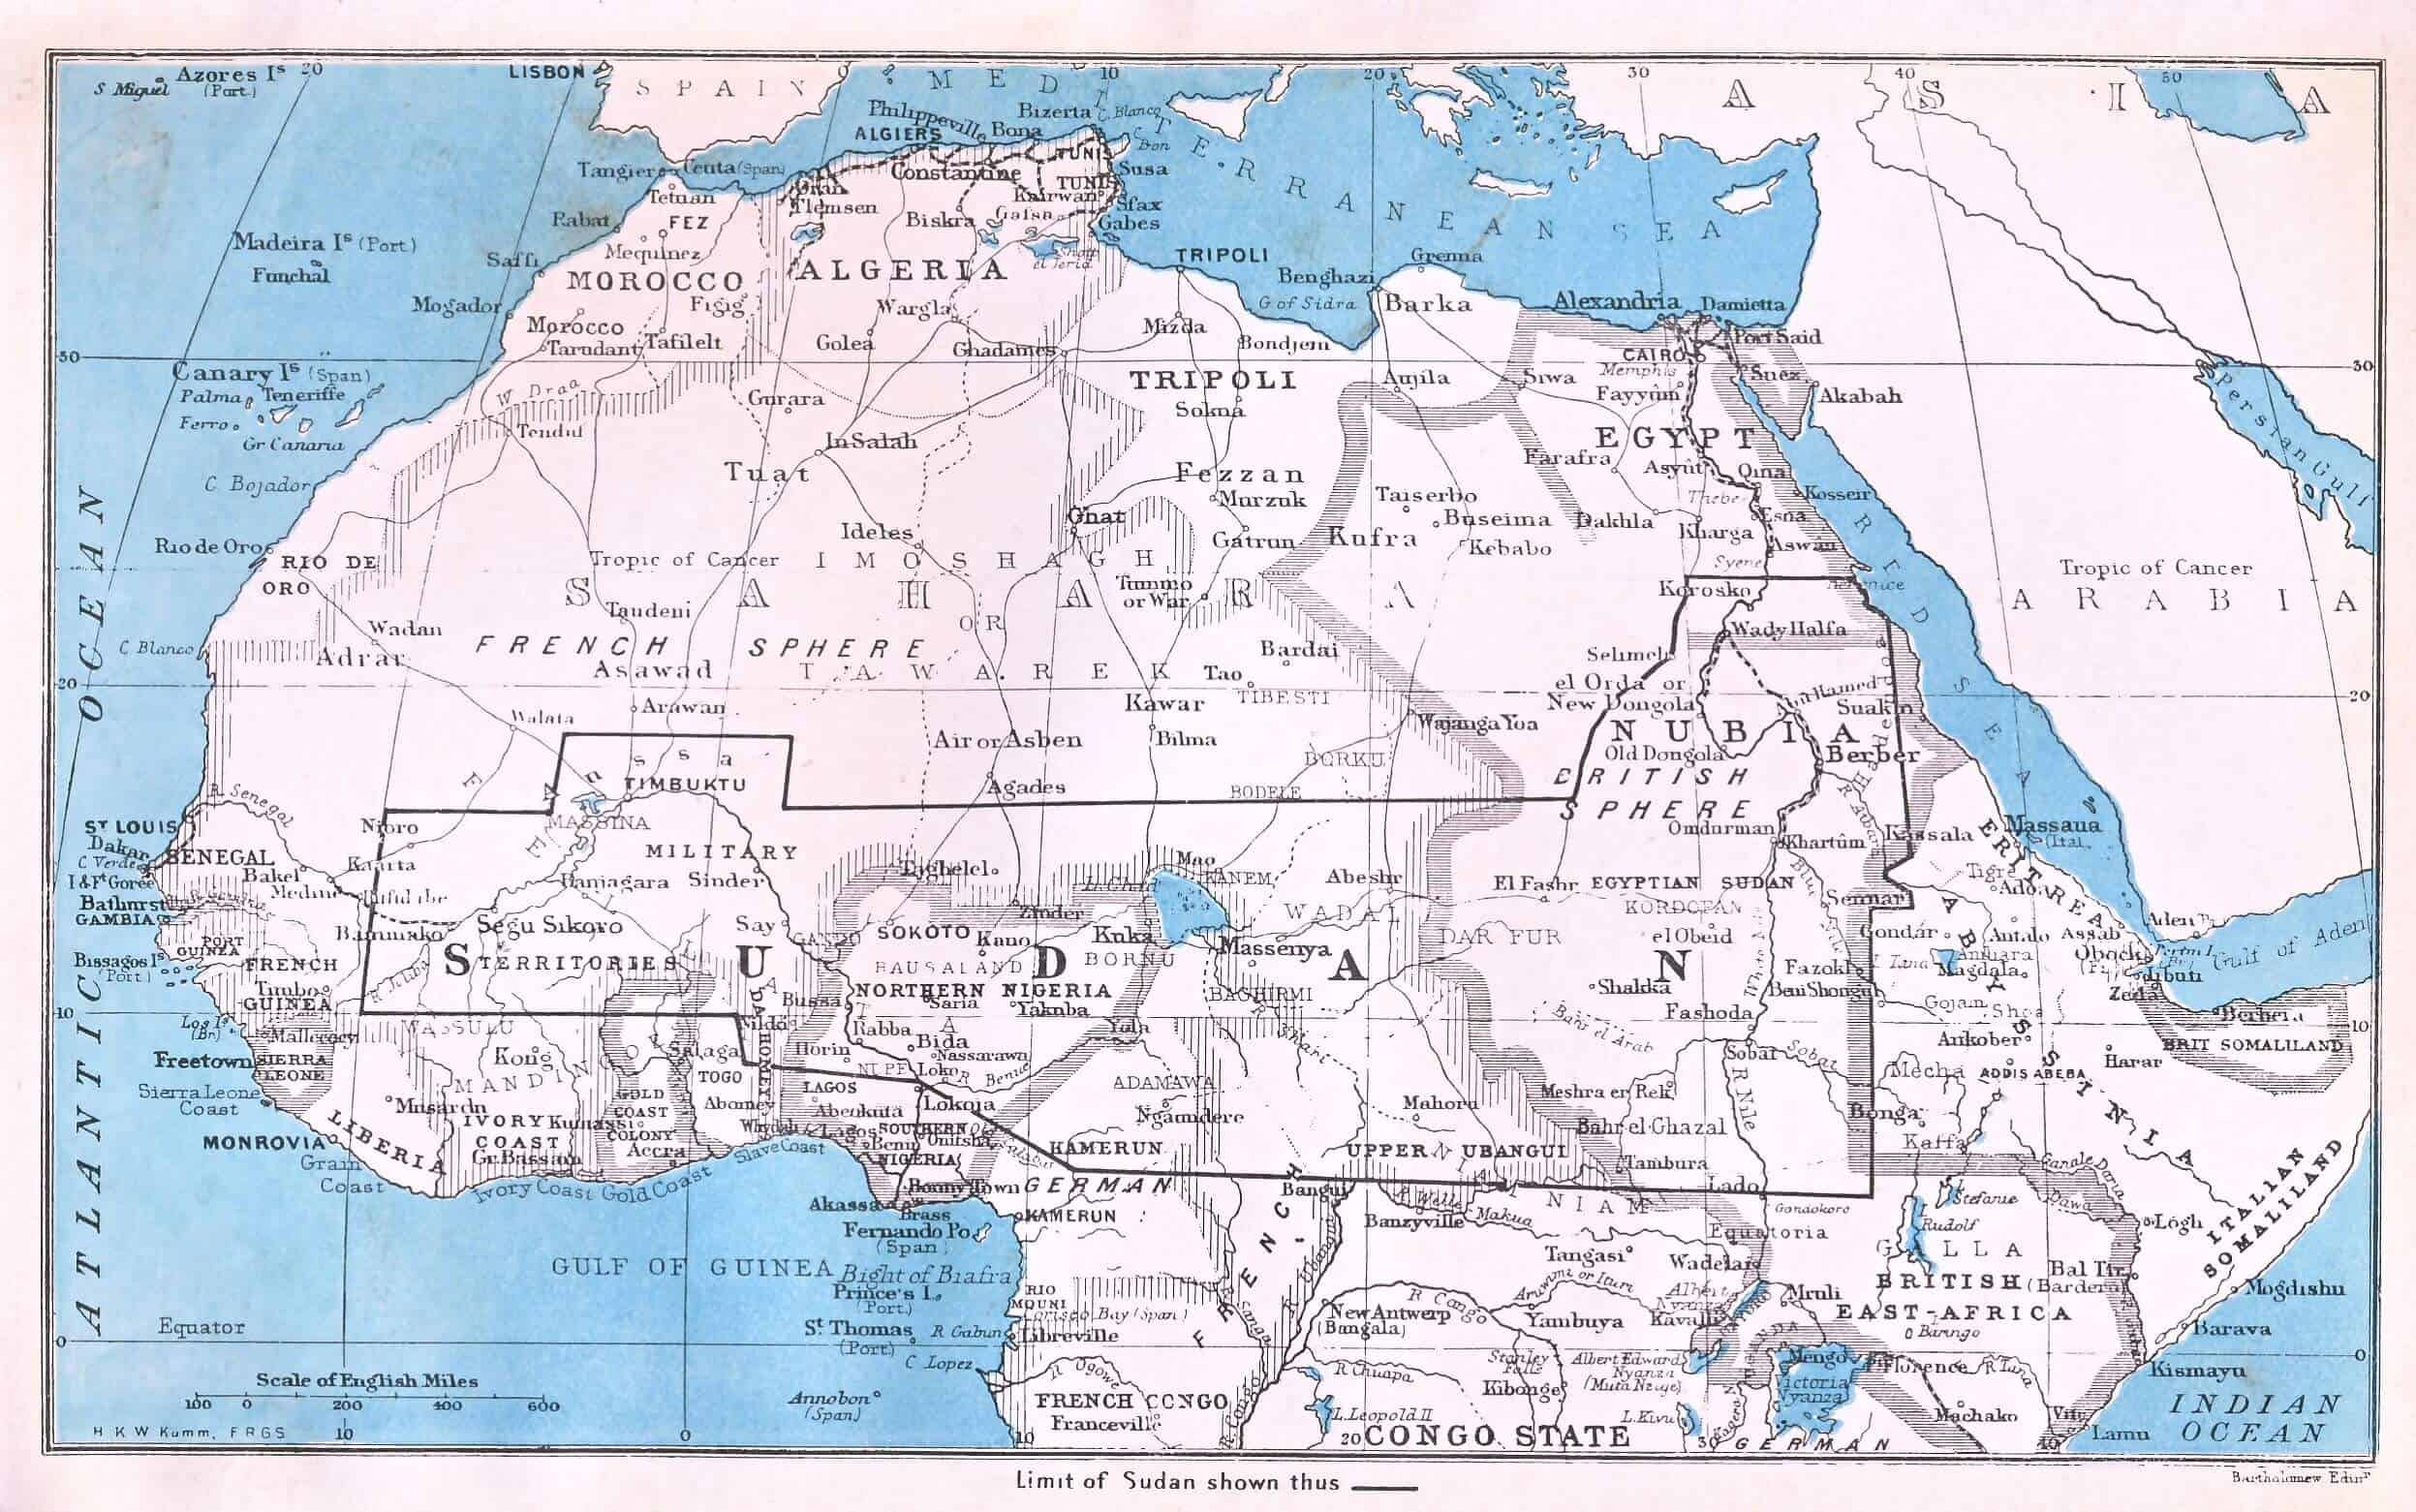 Sudan in the 1900's from Kumm, The Sudan, p.19.